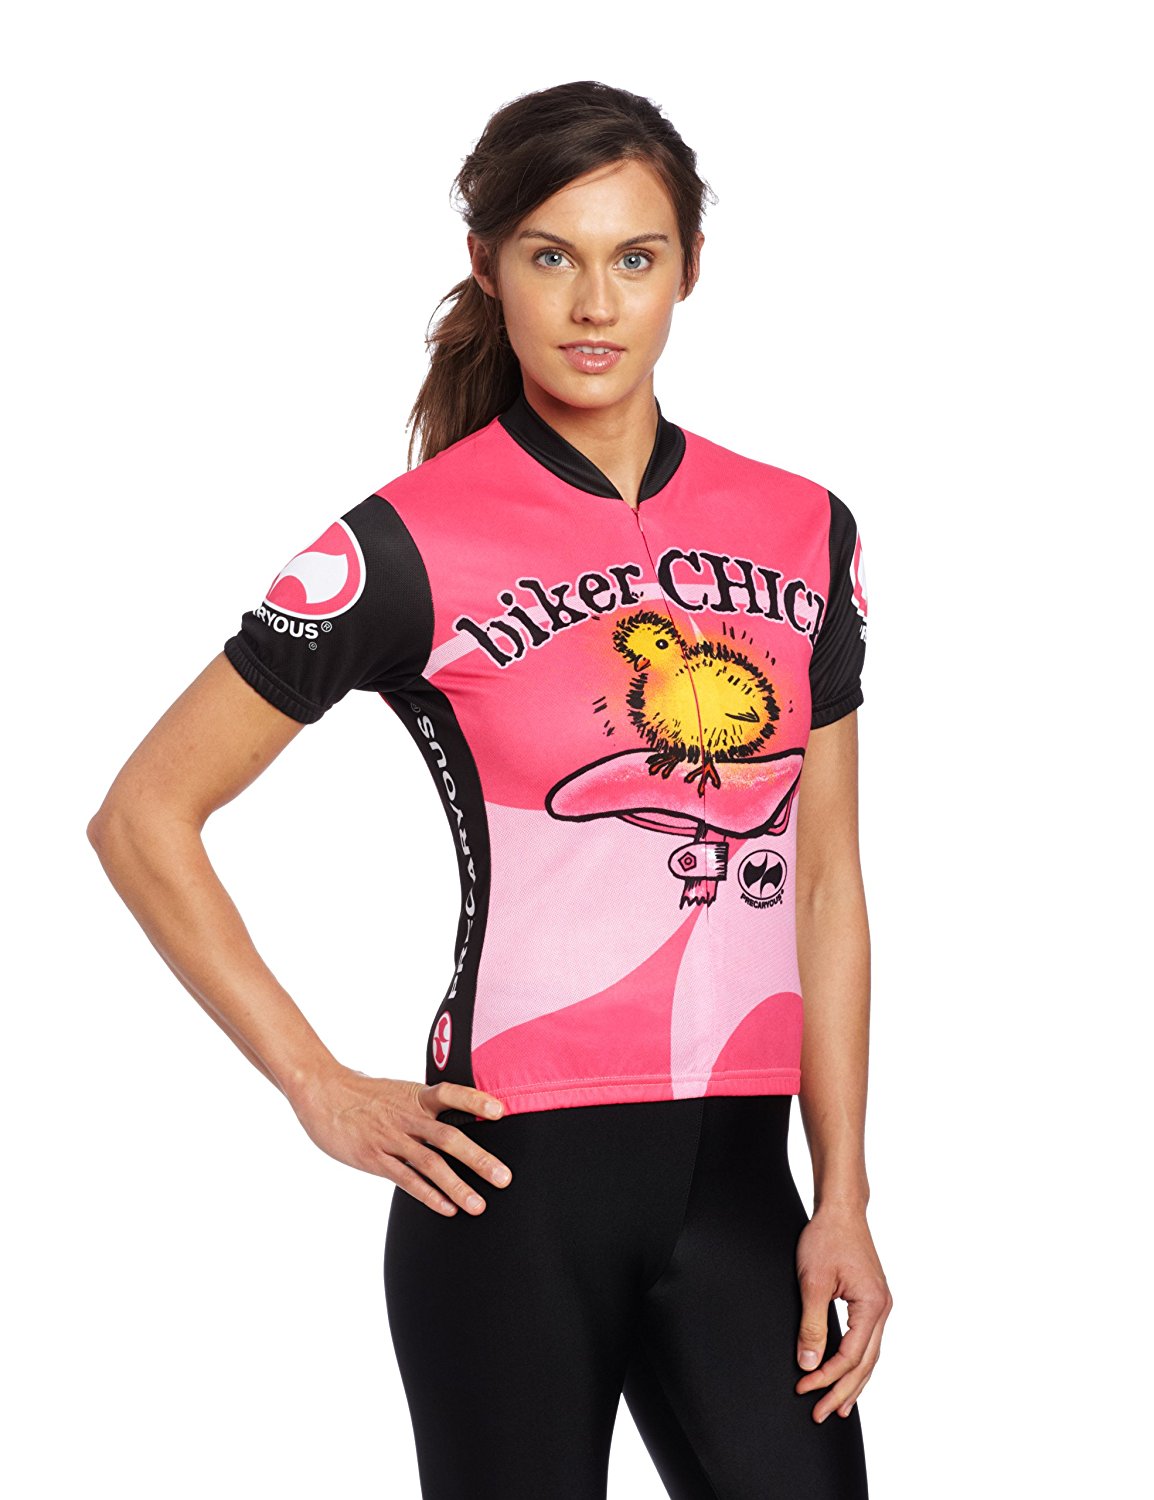 Biker Chick Cycling Jersey - Pink (S, M, L, XL)